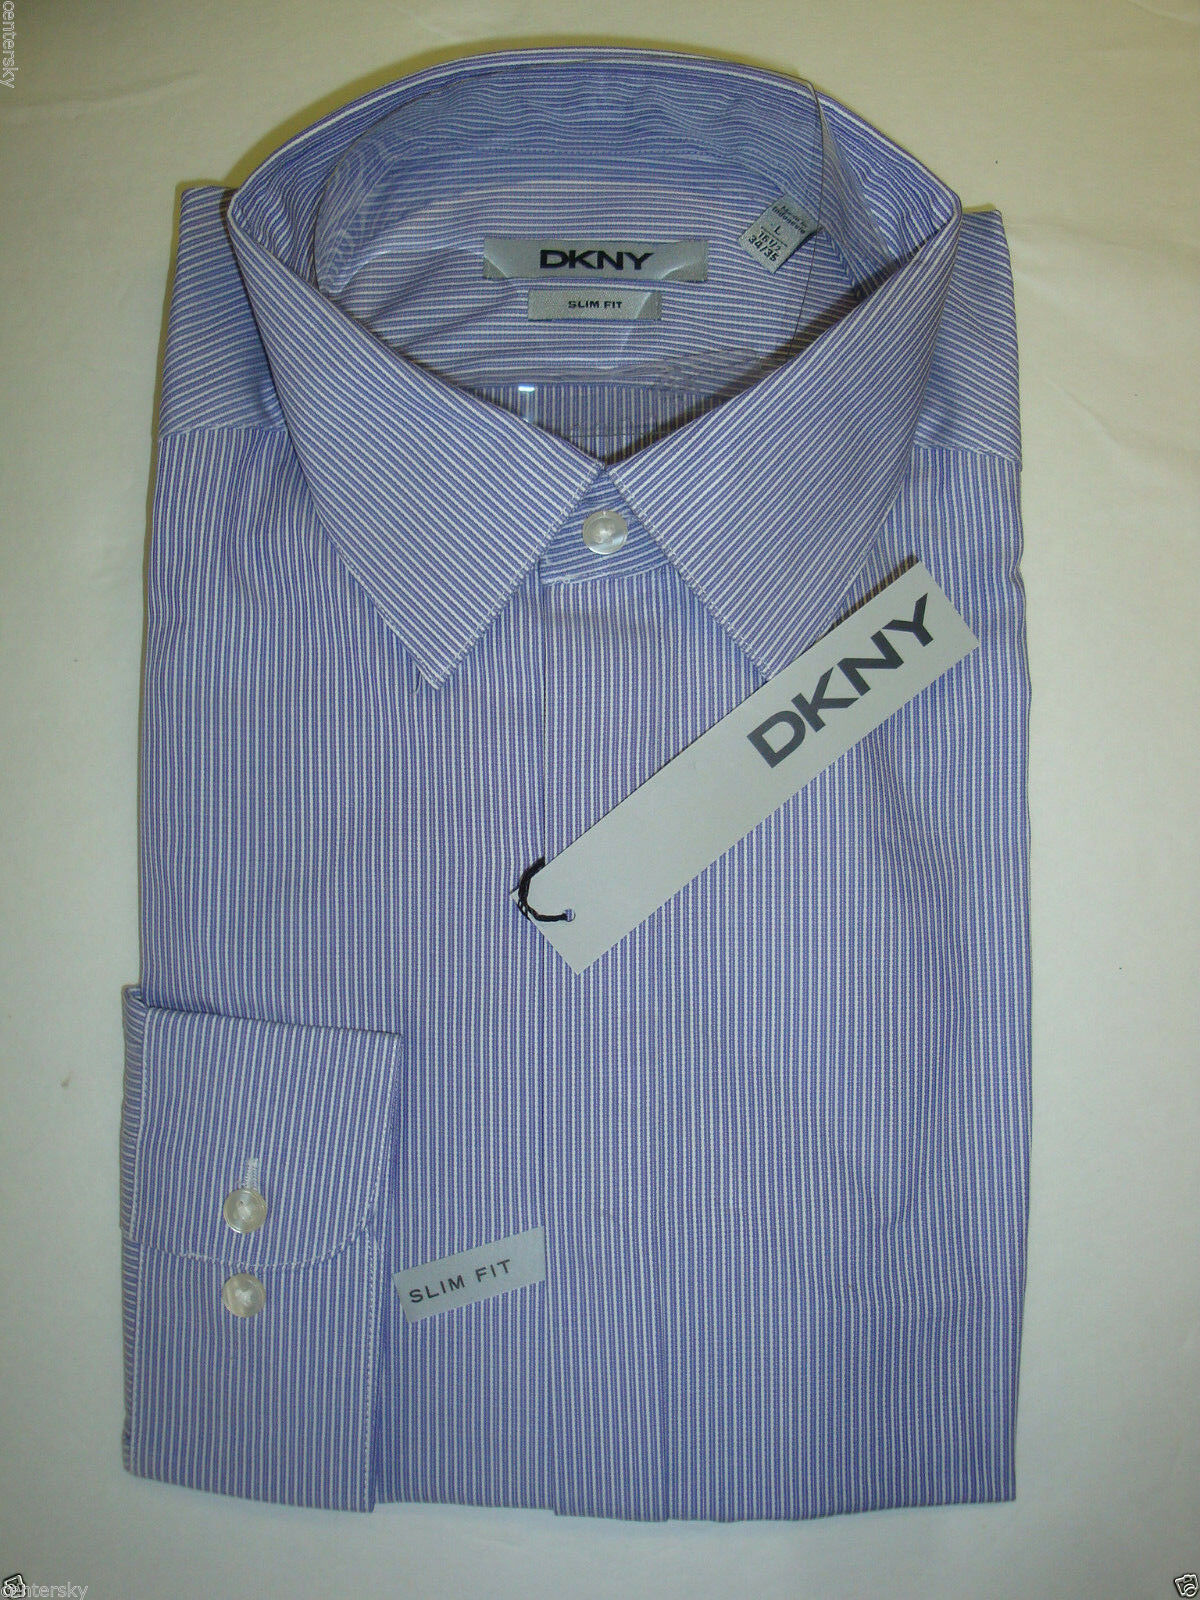 Primary image for New DKNY Men's Slim Fit LS Dress Shirt Concord Purple/White Stripe L 16.5 34/35